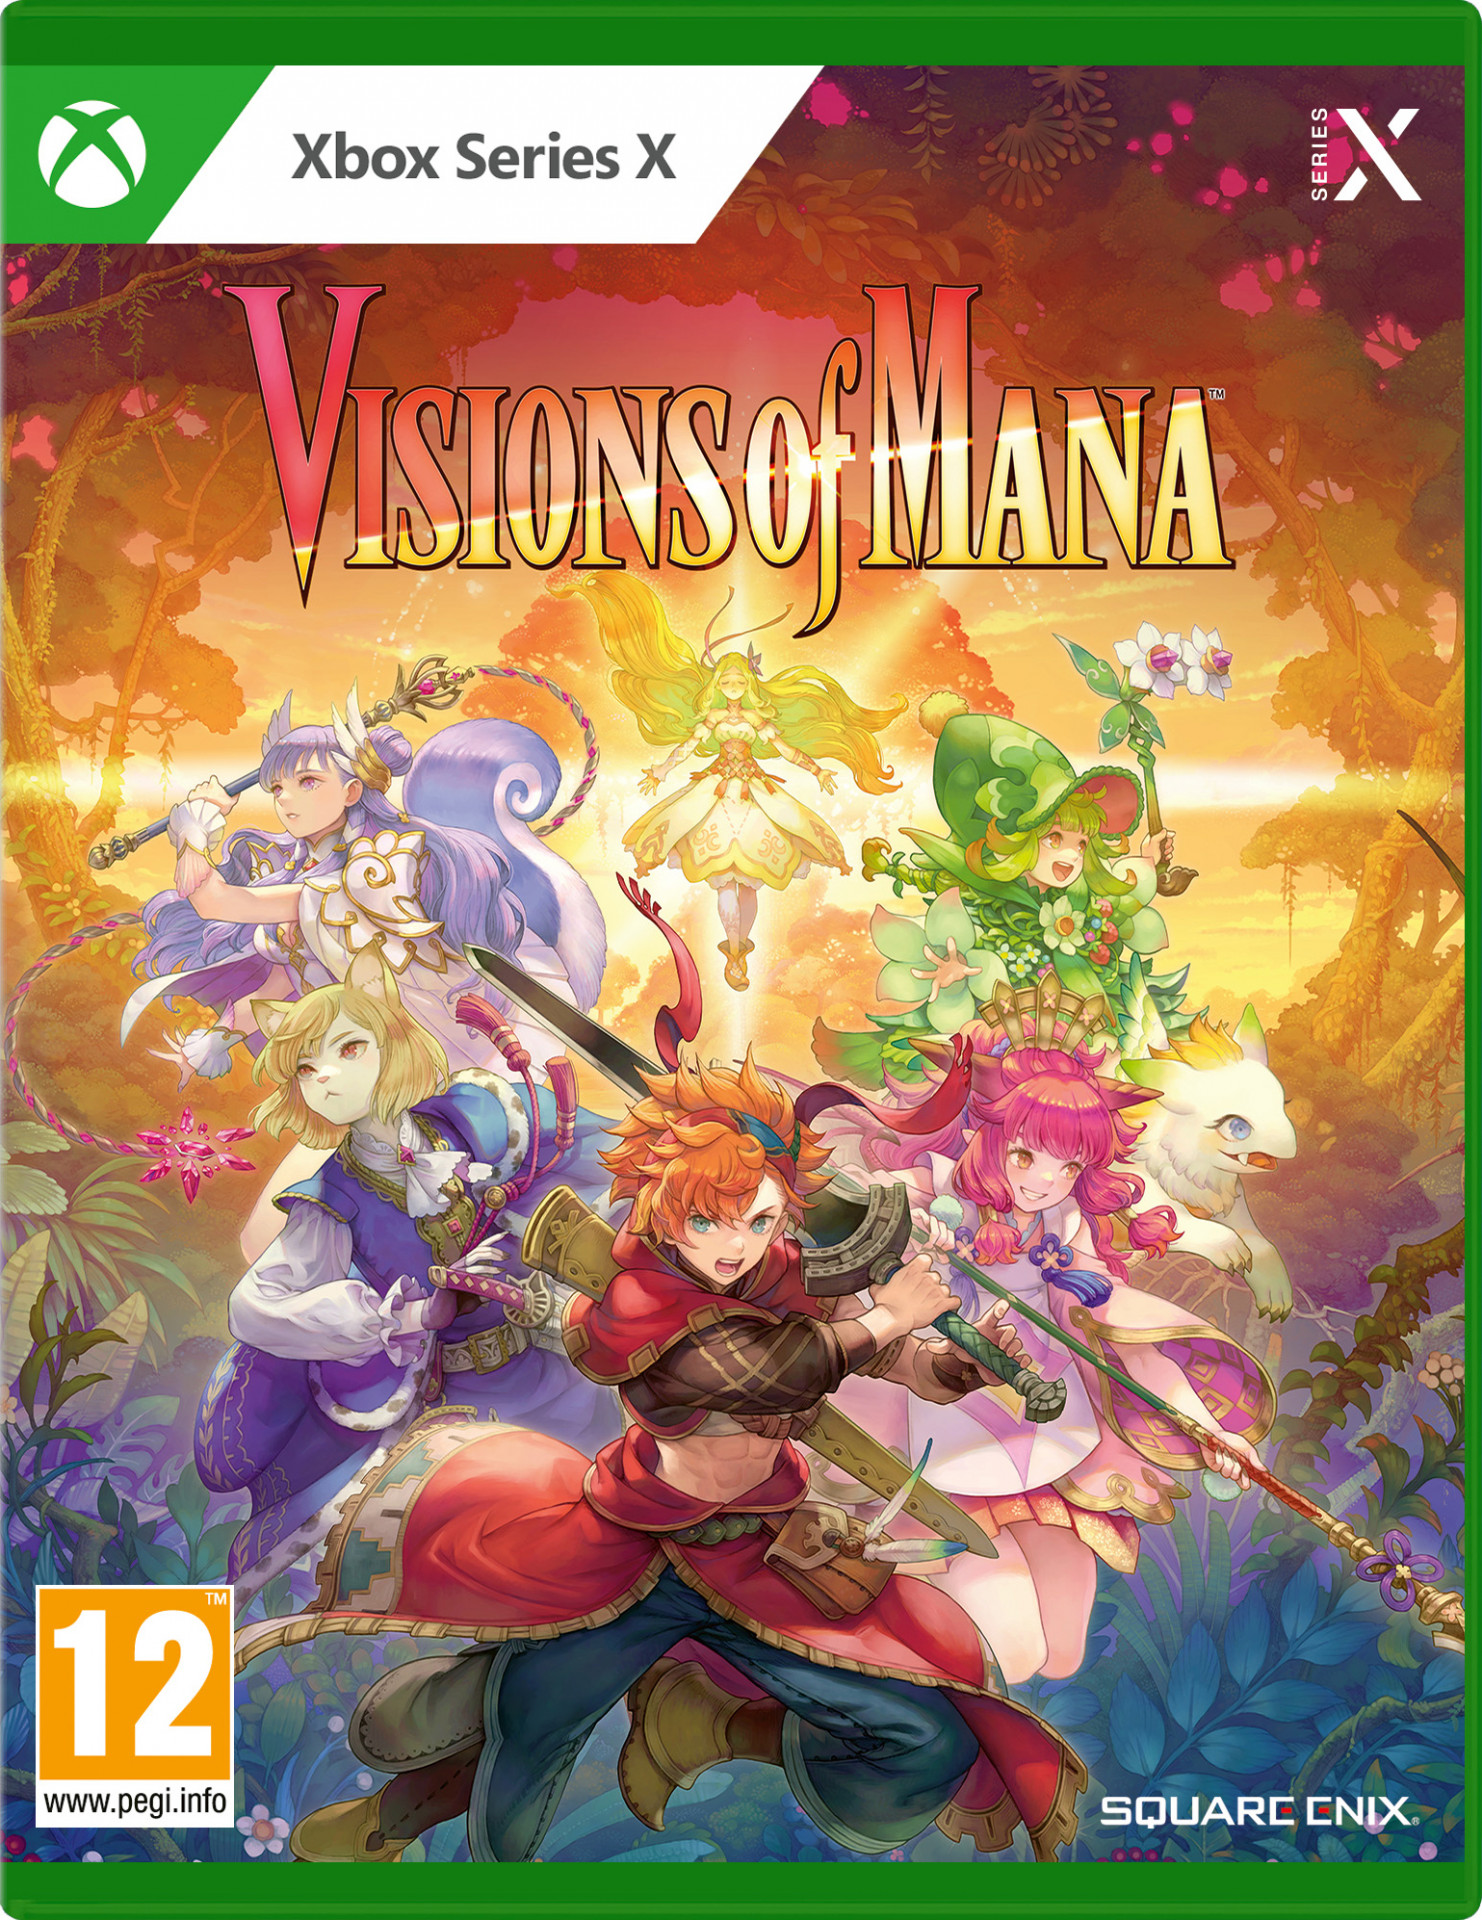 Visions of Mana (Xbox Series X), Square Enix